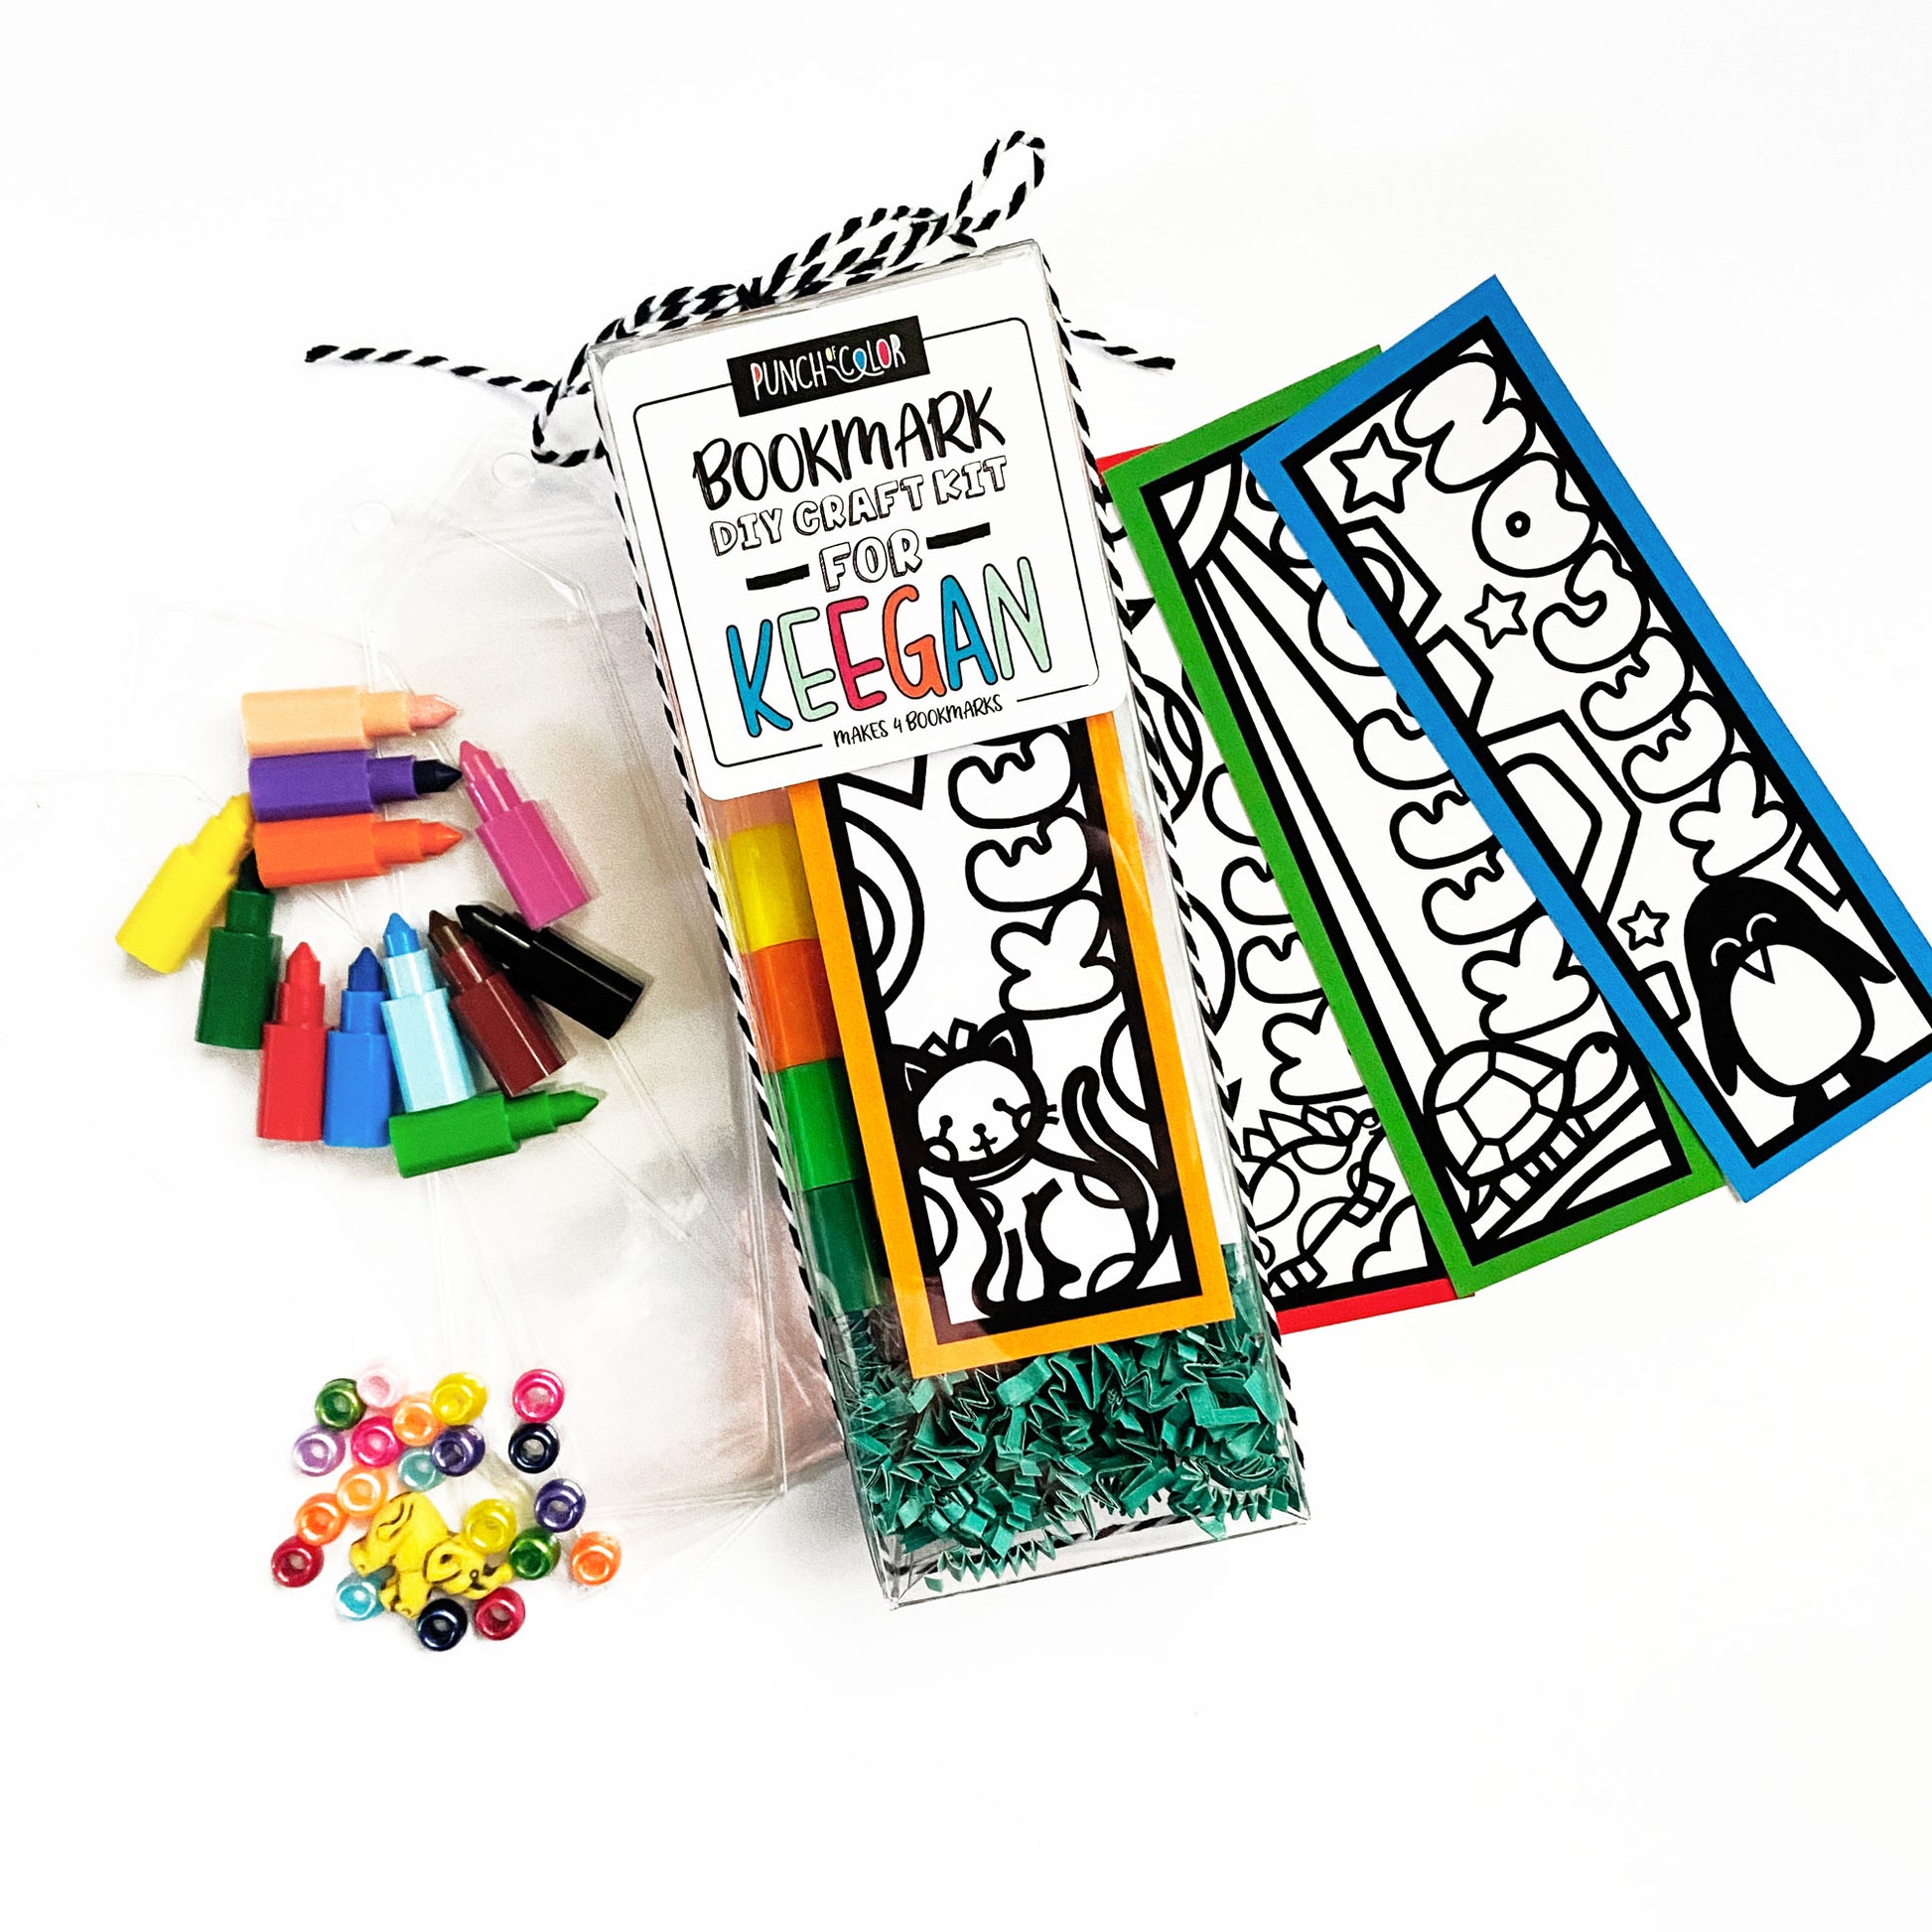 Kids bookmark arts and crafts kit stocking stuffer.